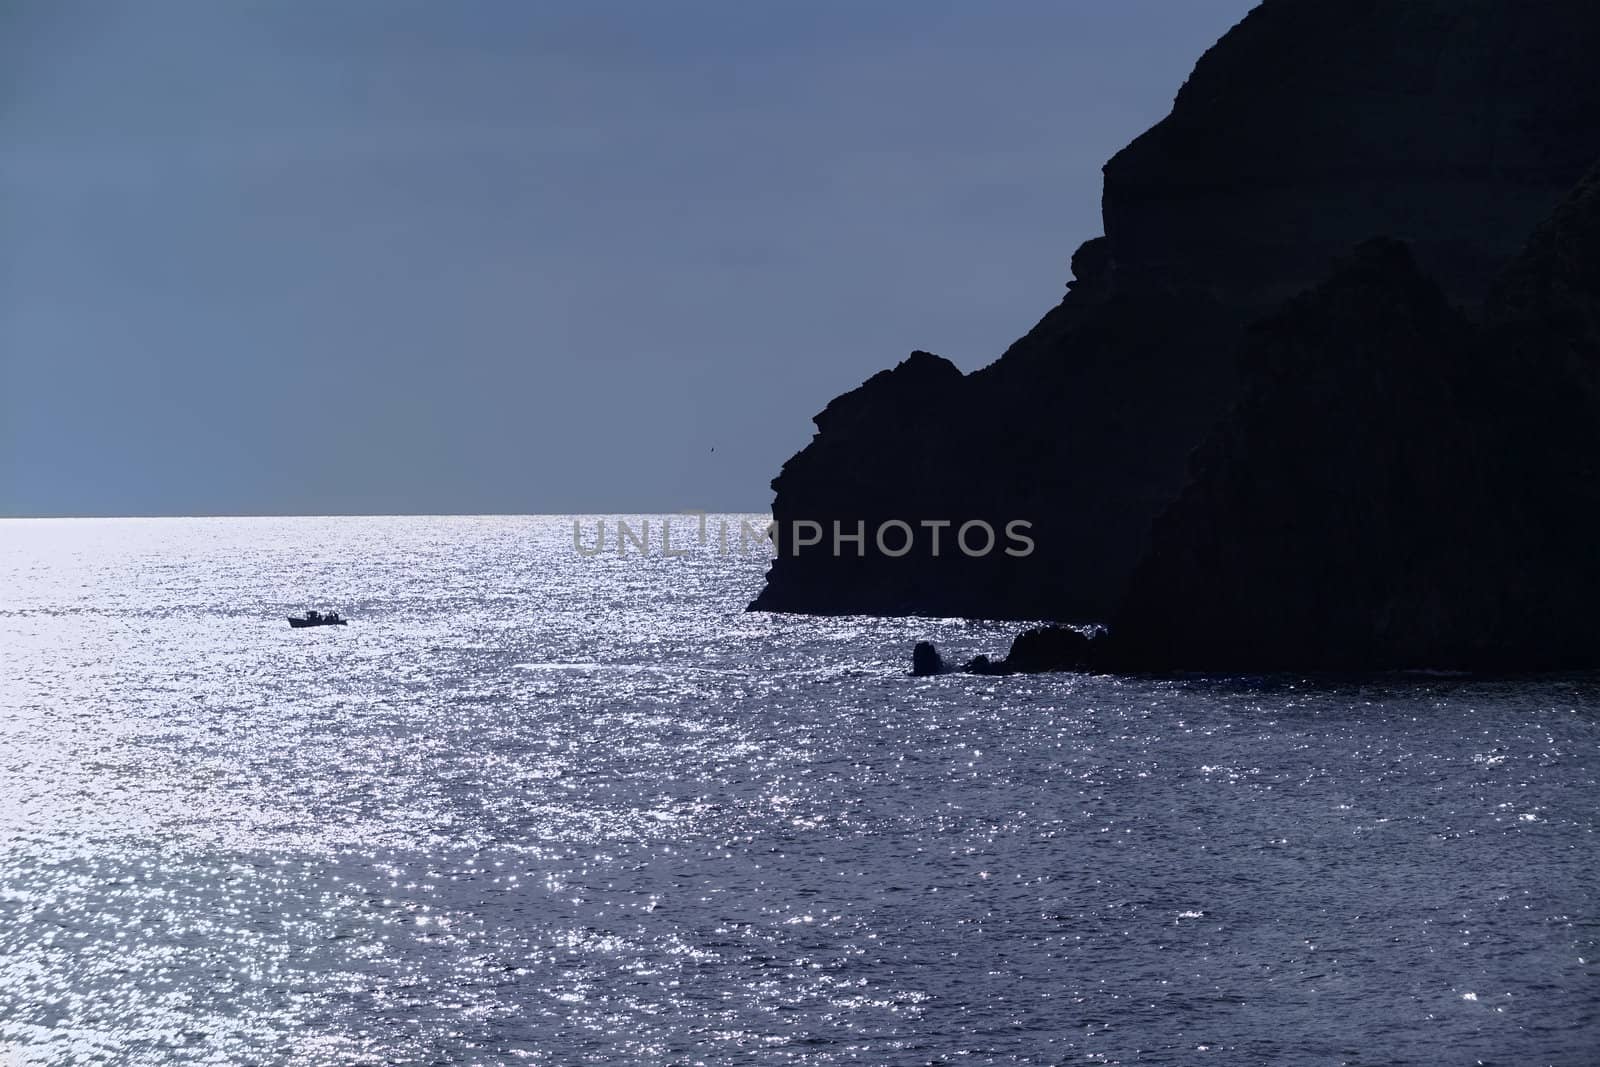 ITALY, Campania, Ischia island, S.Angelo, a fishing boat and view  S.Angelo rocky coast